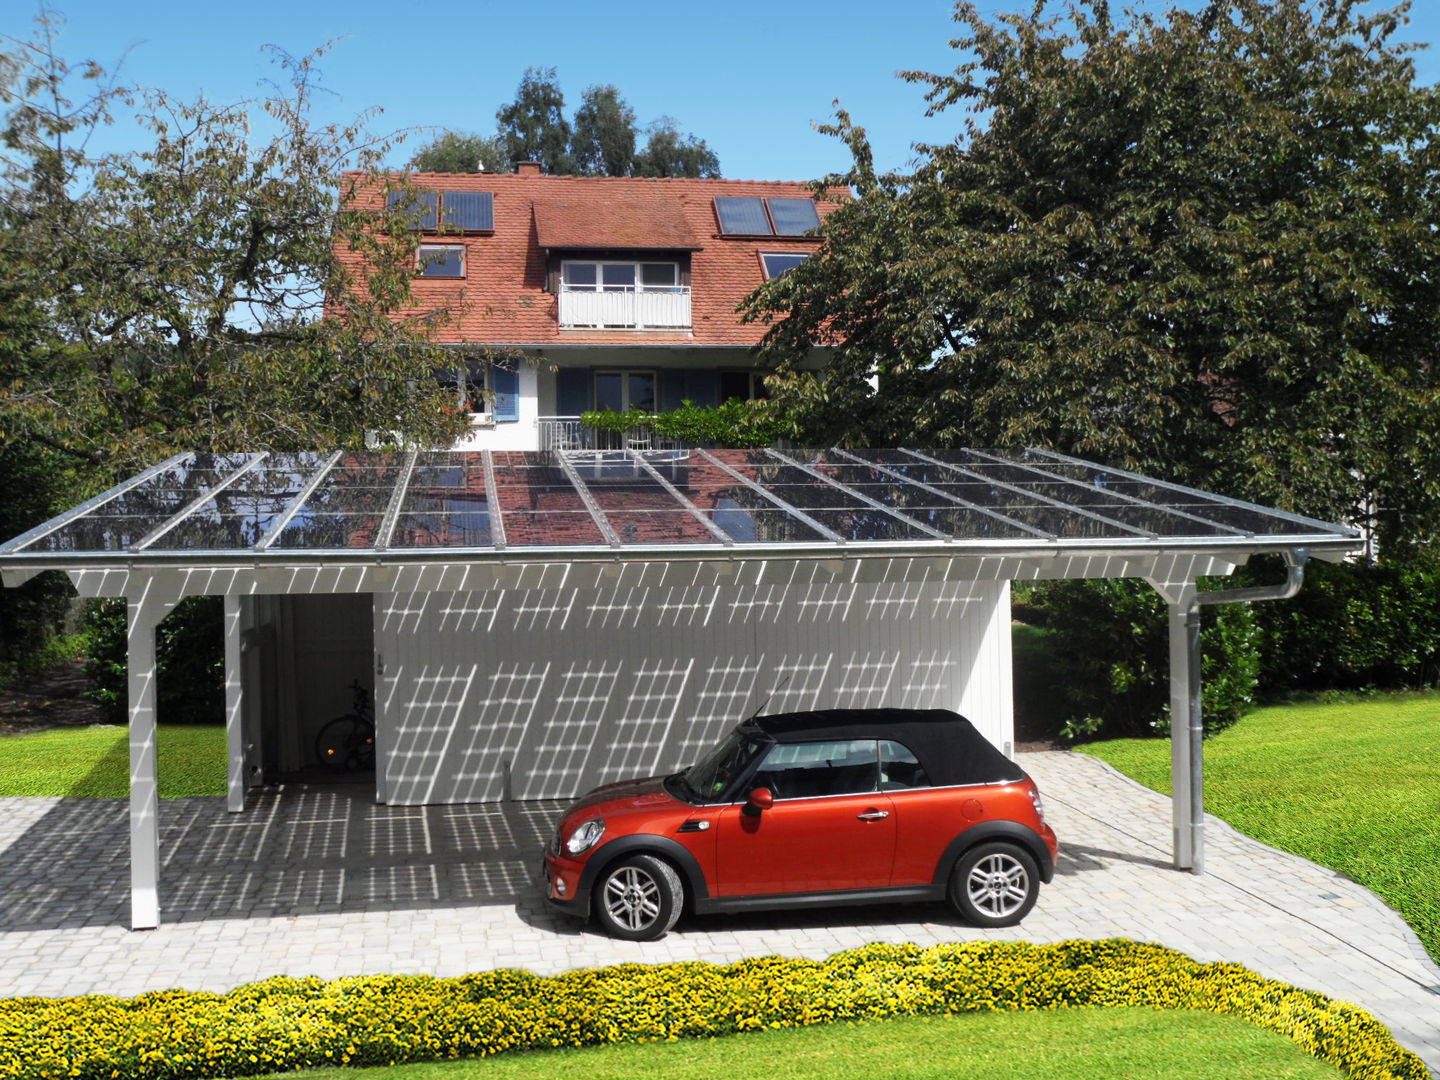 Solar-Glas-Carport, Solarterrassen & Carportwerk GmbH Solarterrassen & Carportwerk GmbH โรงรถและหลังคากันแดด โรงรถและหลังคากันแดด